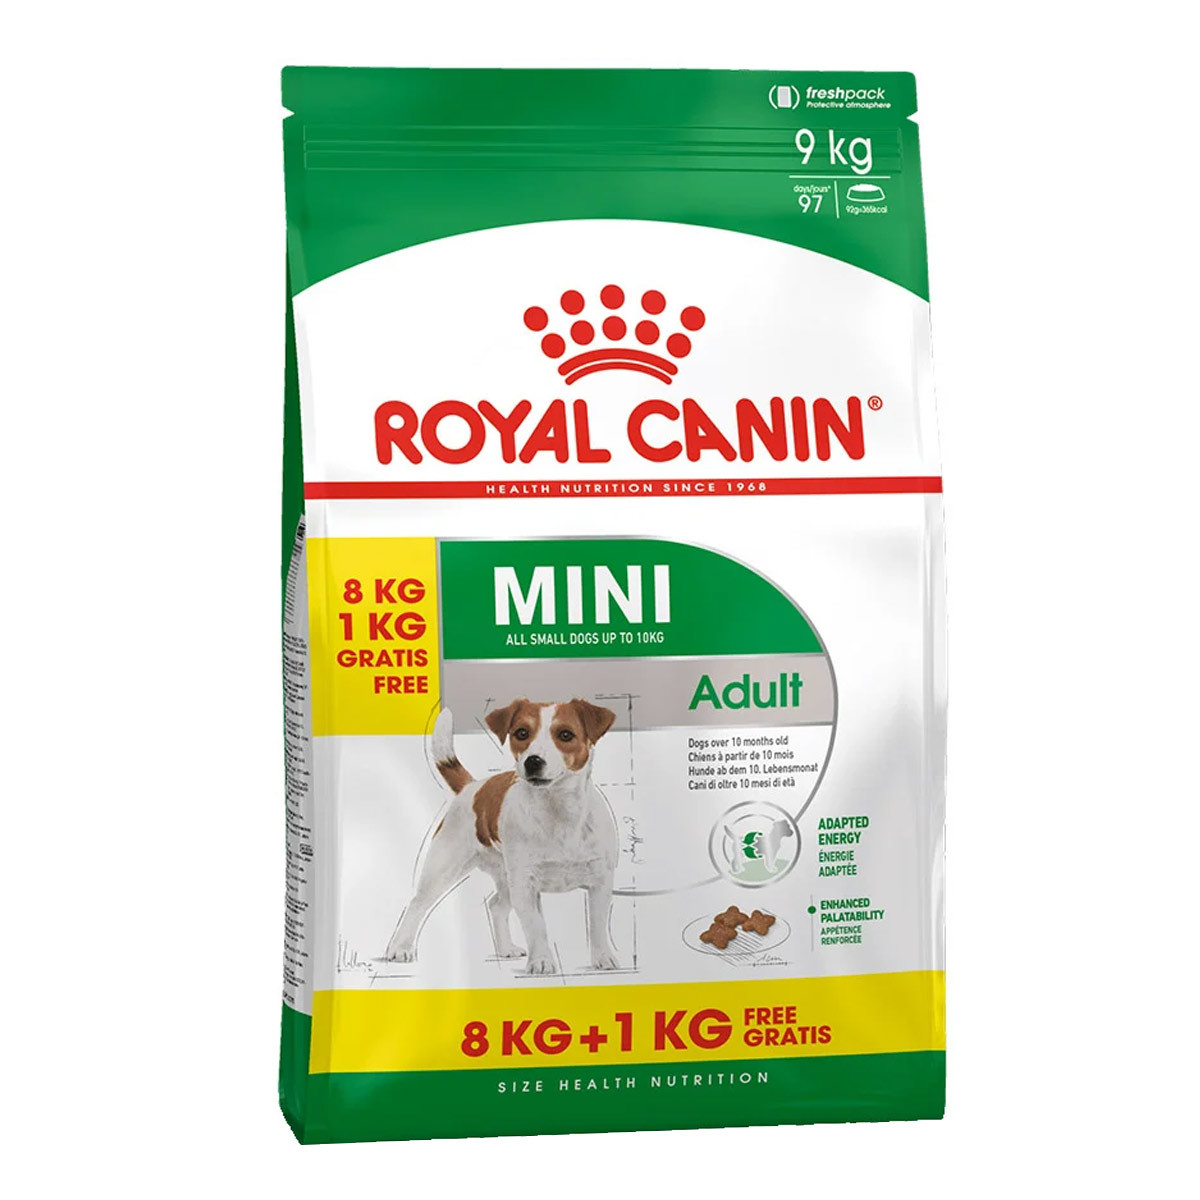 ROYAL CANIN MINI Adult suché krmivo pro malé psy 8 kg + 1 kg zdarma